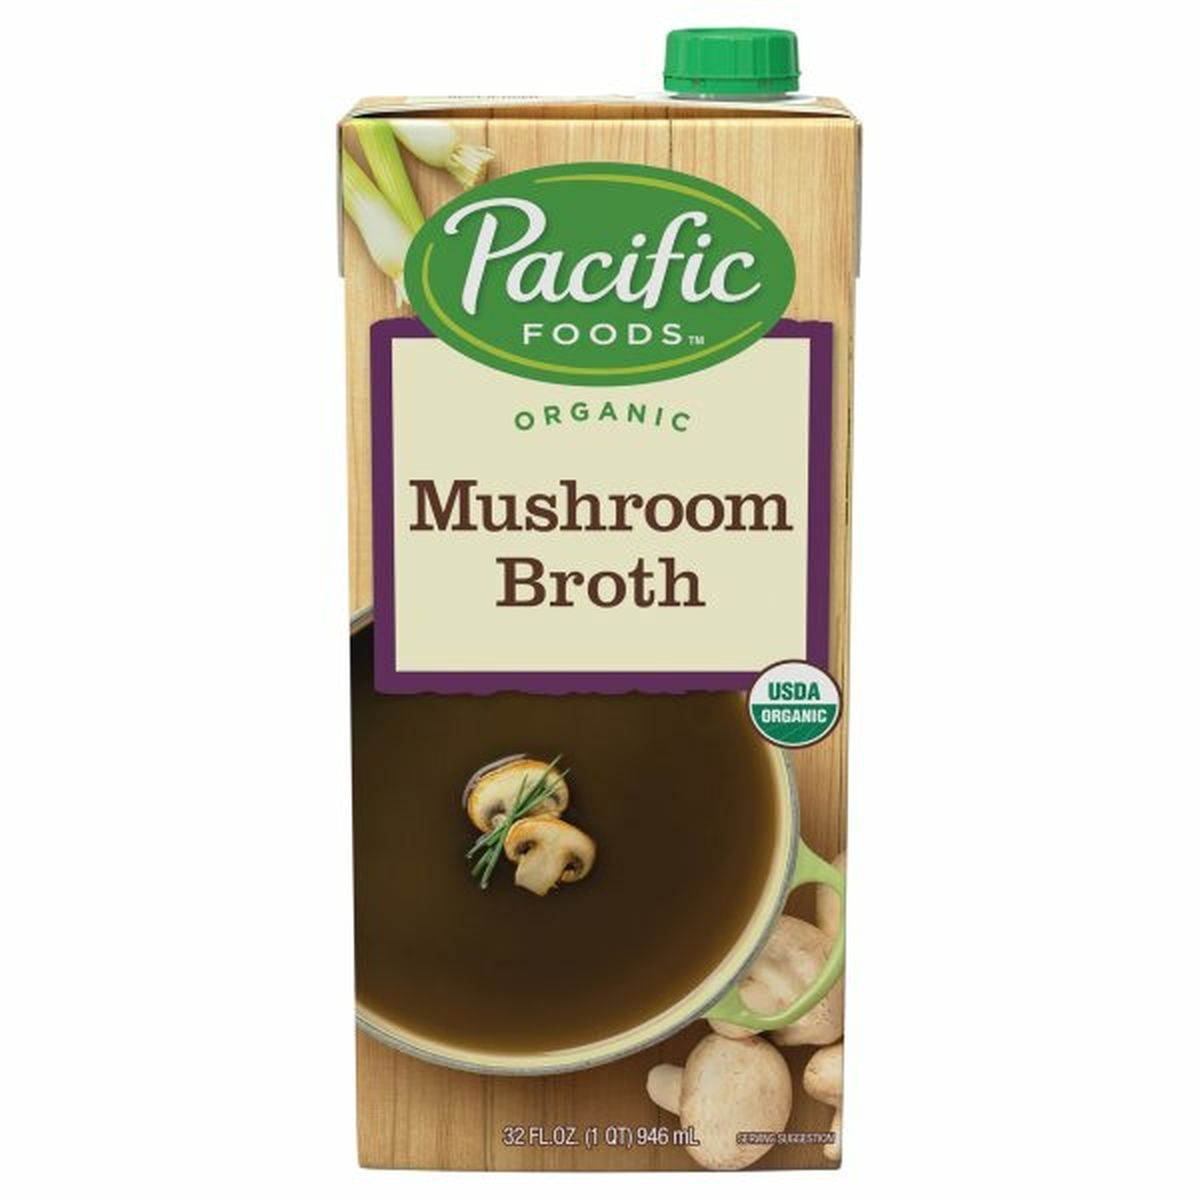 Calories in Pacific Mushroom Broth, Organic